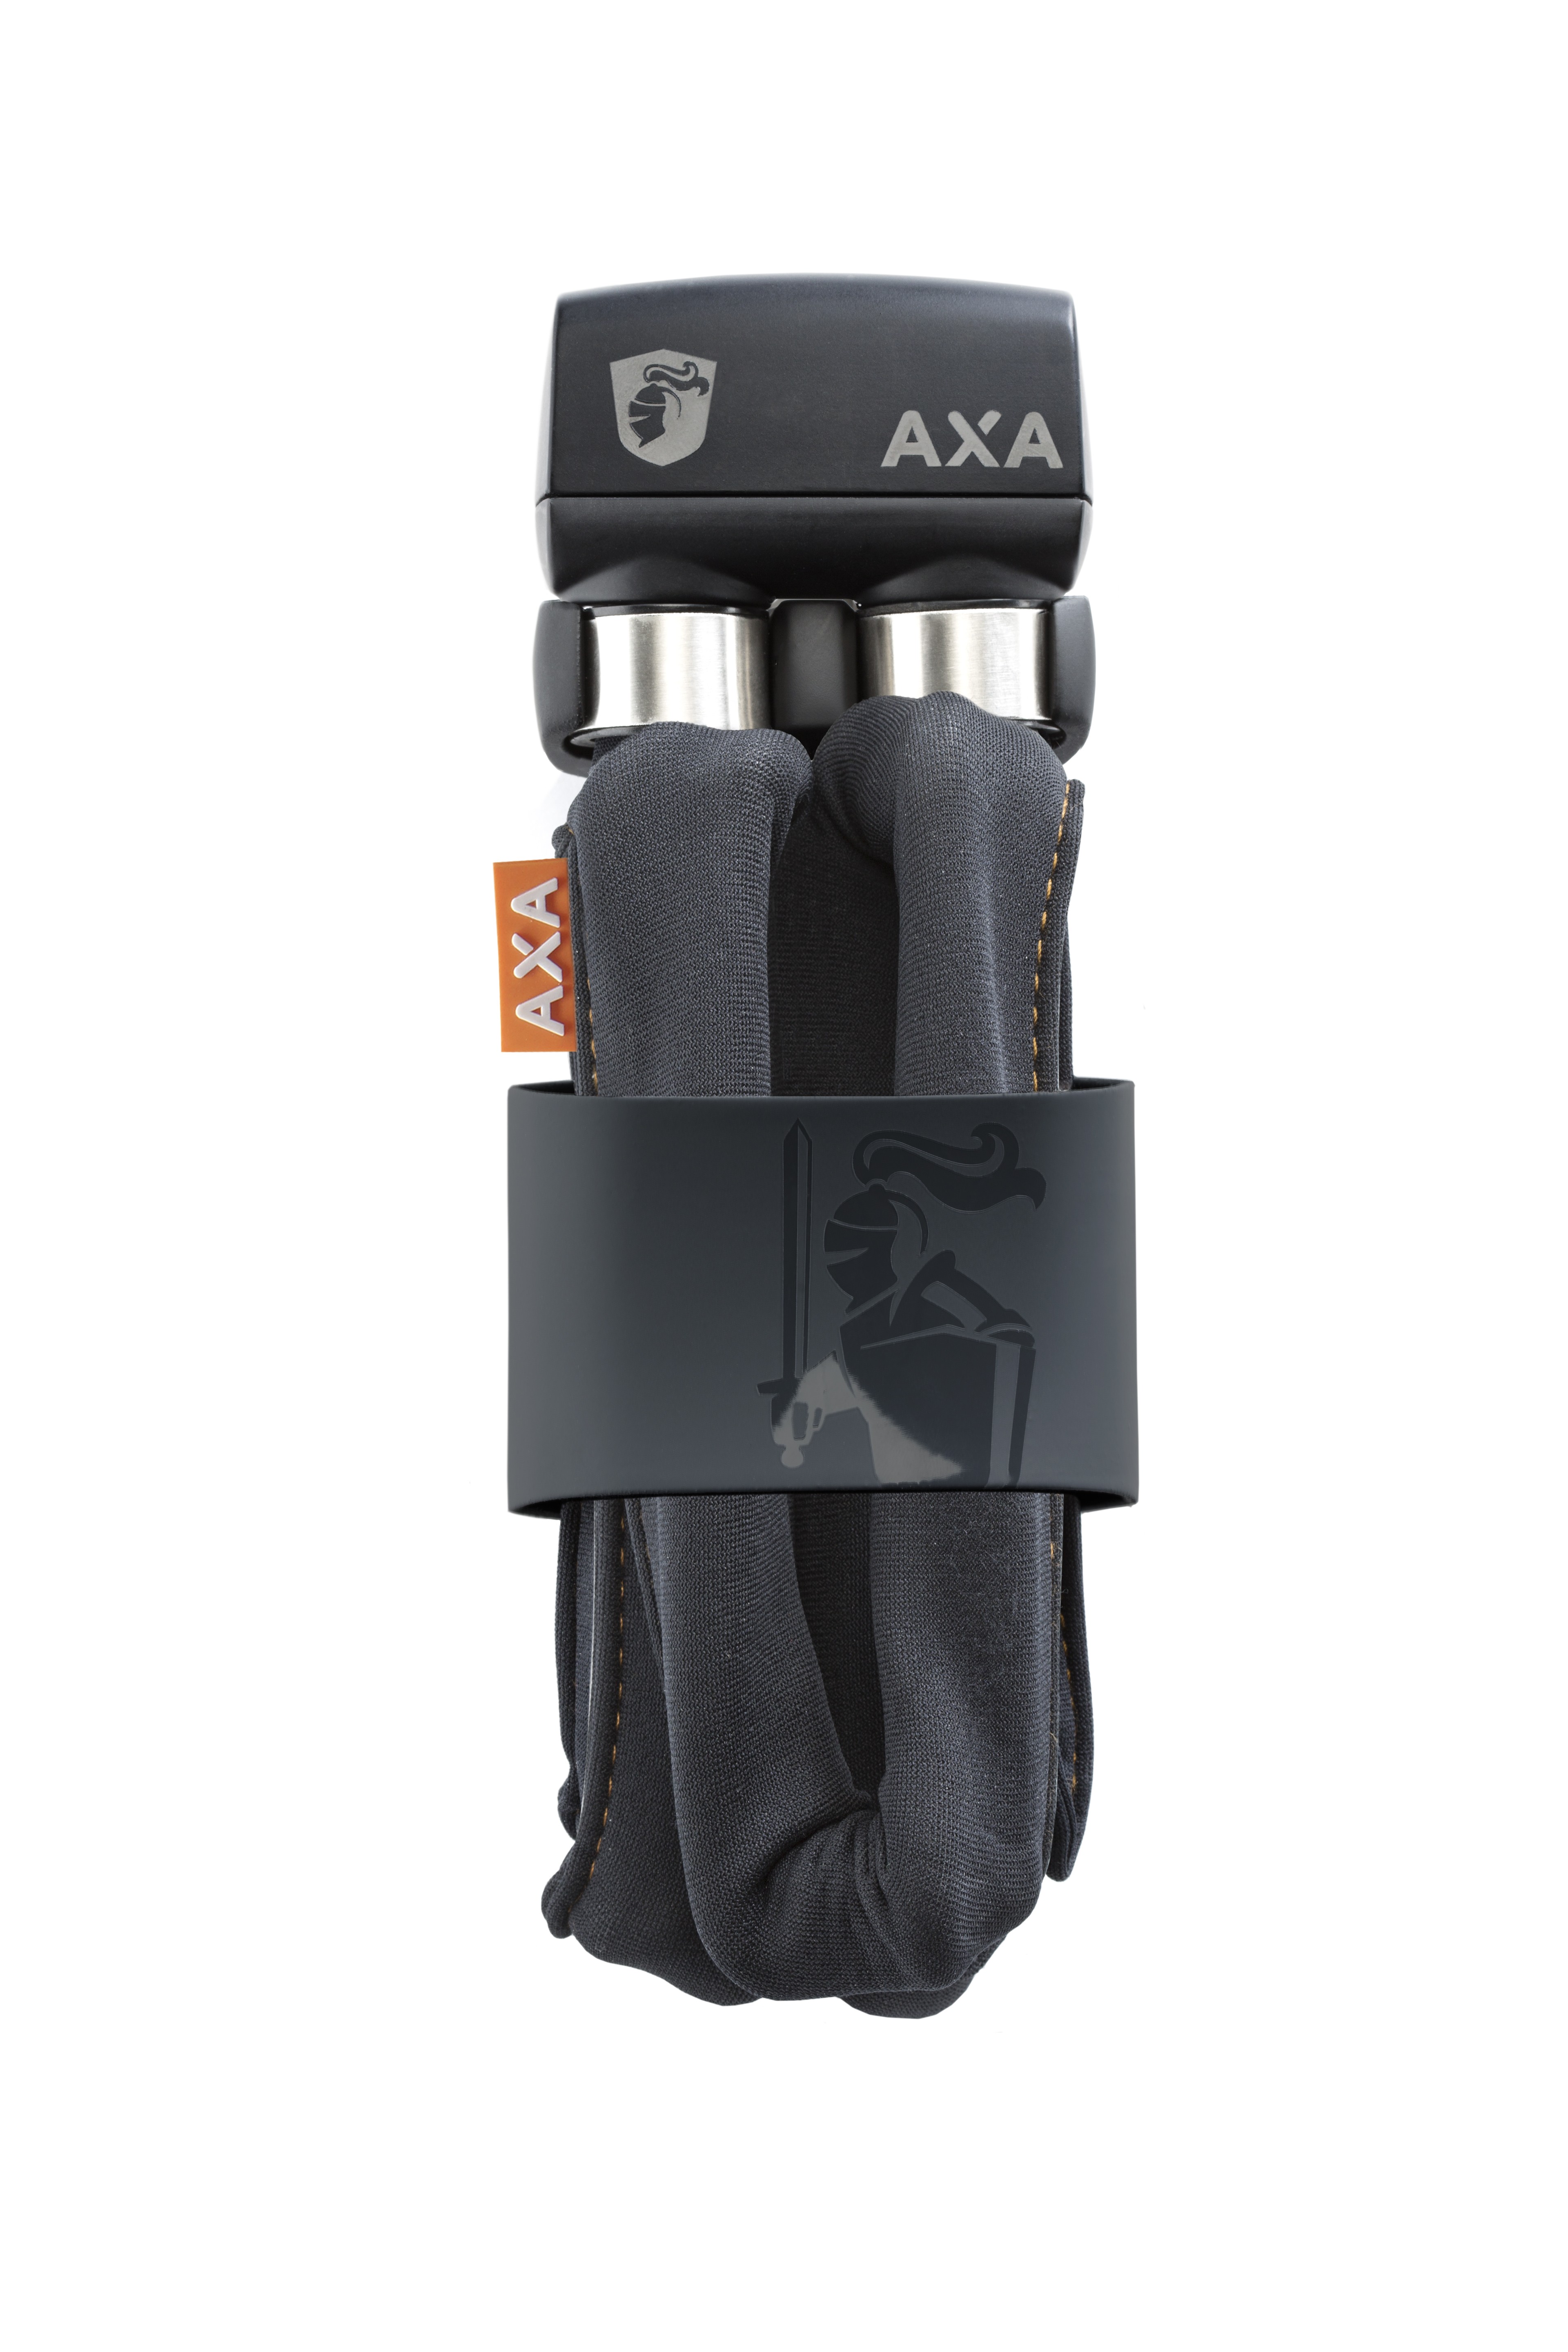 Axa ANTIVOL VELO PLIABLE-PLIANT FOLDABLE 600 A CLE DIAM 6mm L0.95M GRIS FONCE